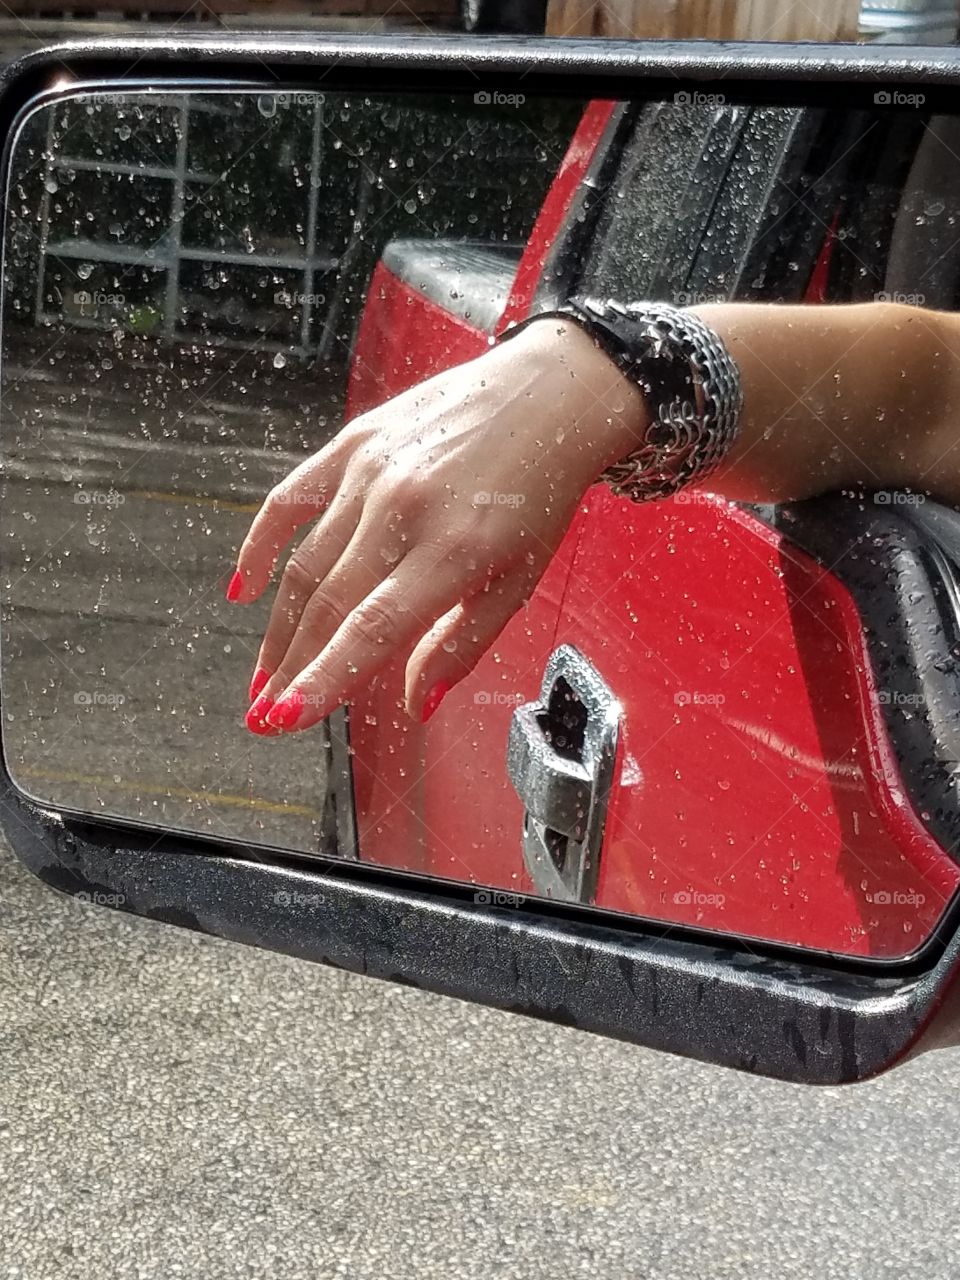 rain in Texas